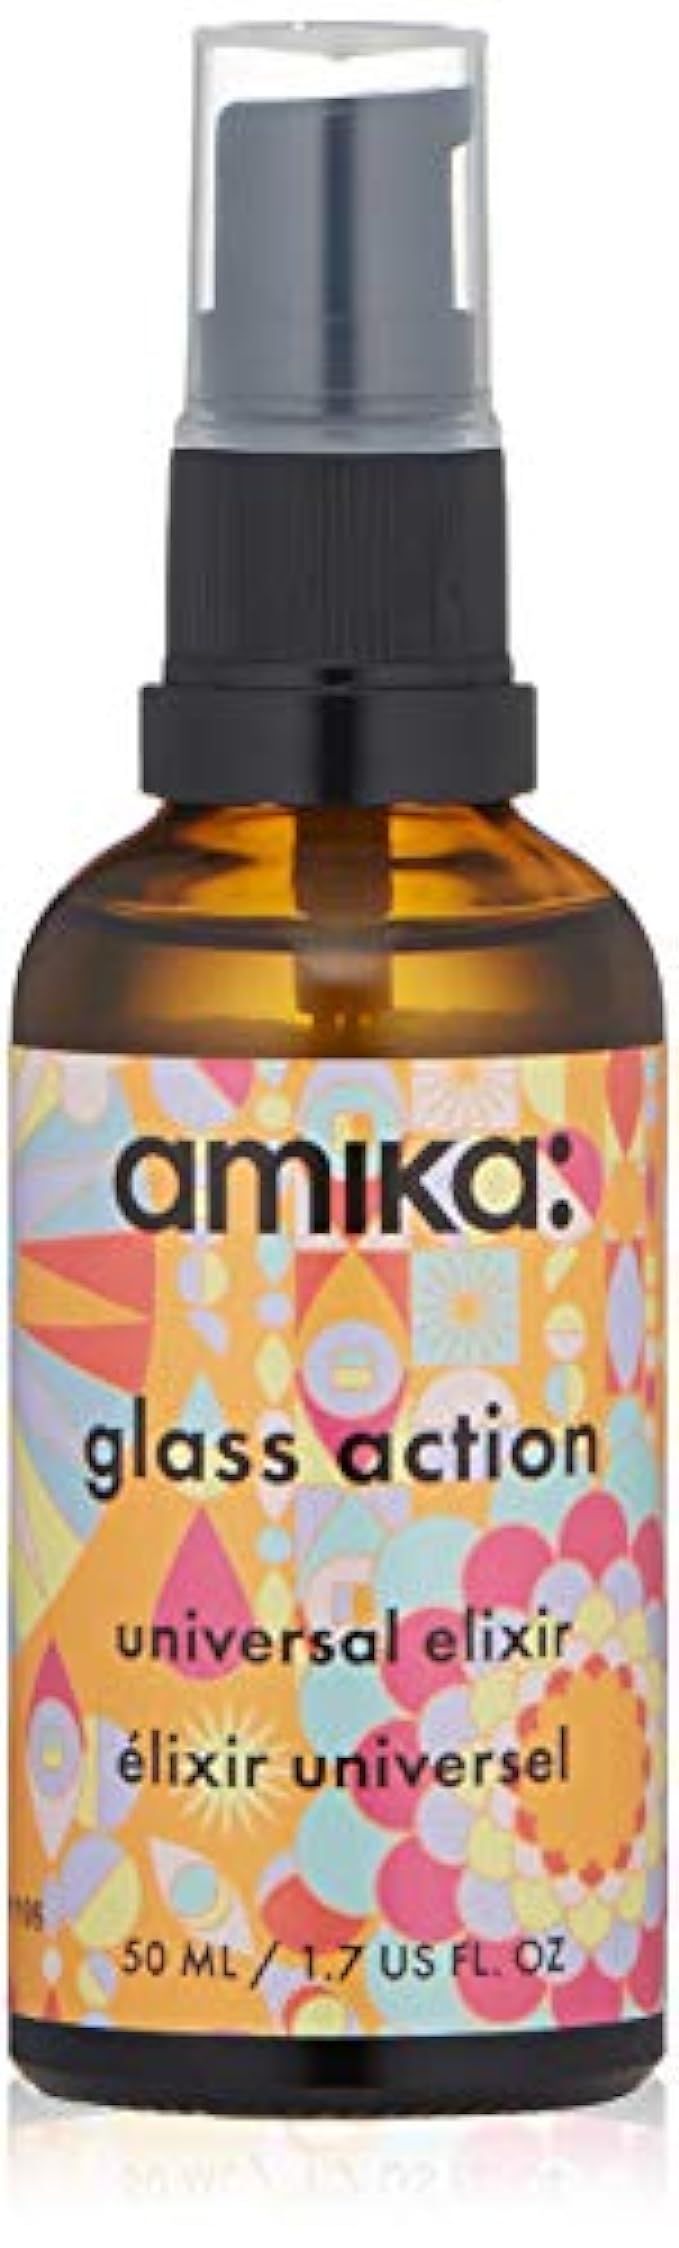 amika Oil Treatment for Hair | Amazon (US)